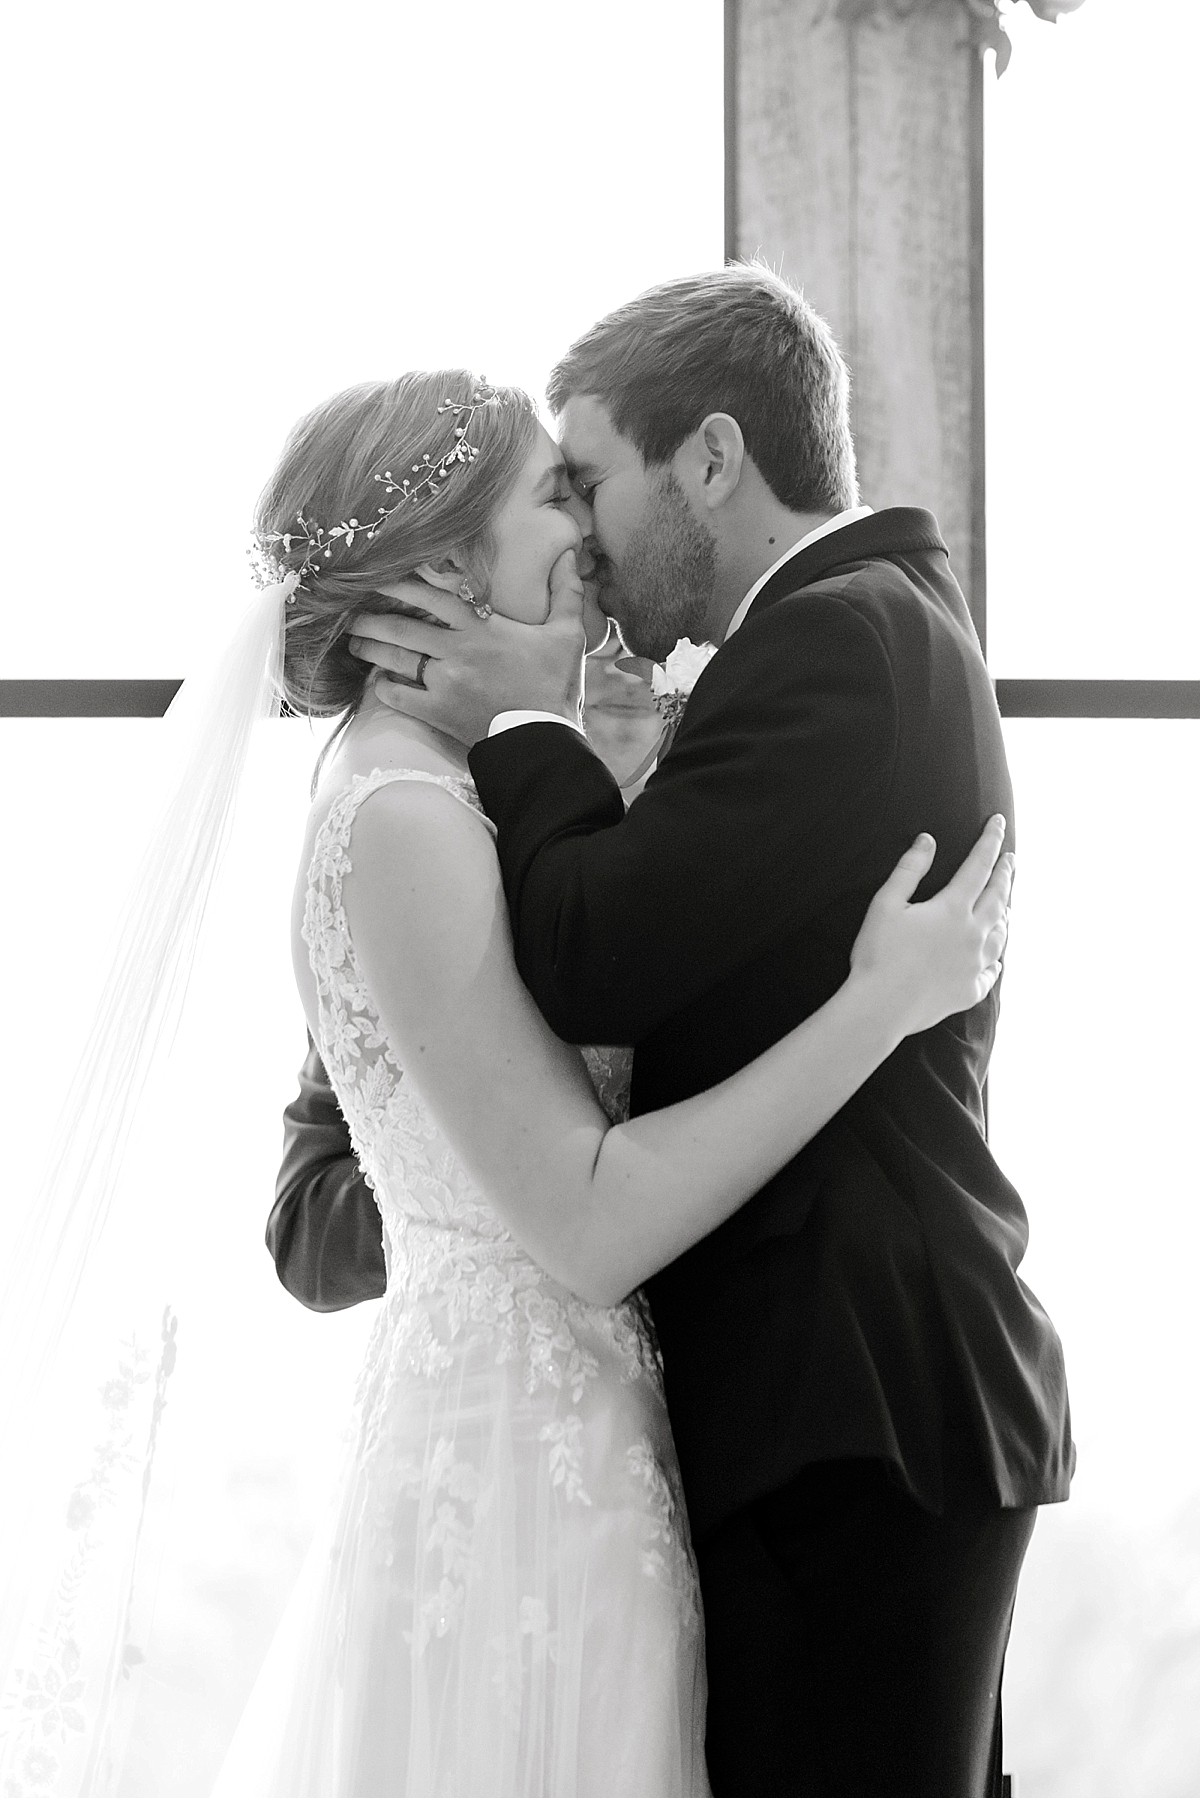 Deep in the Heart Farms Wedding by Houston photographers Eric & Jenn Photography